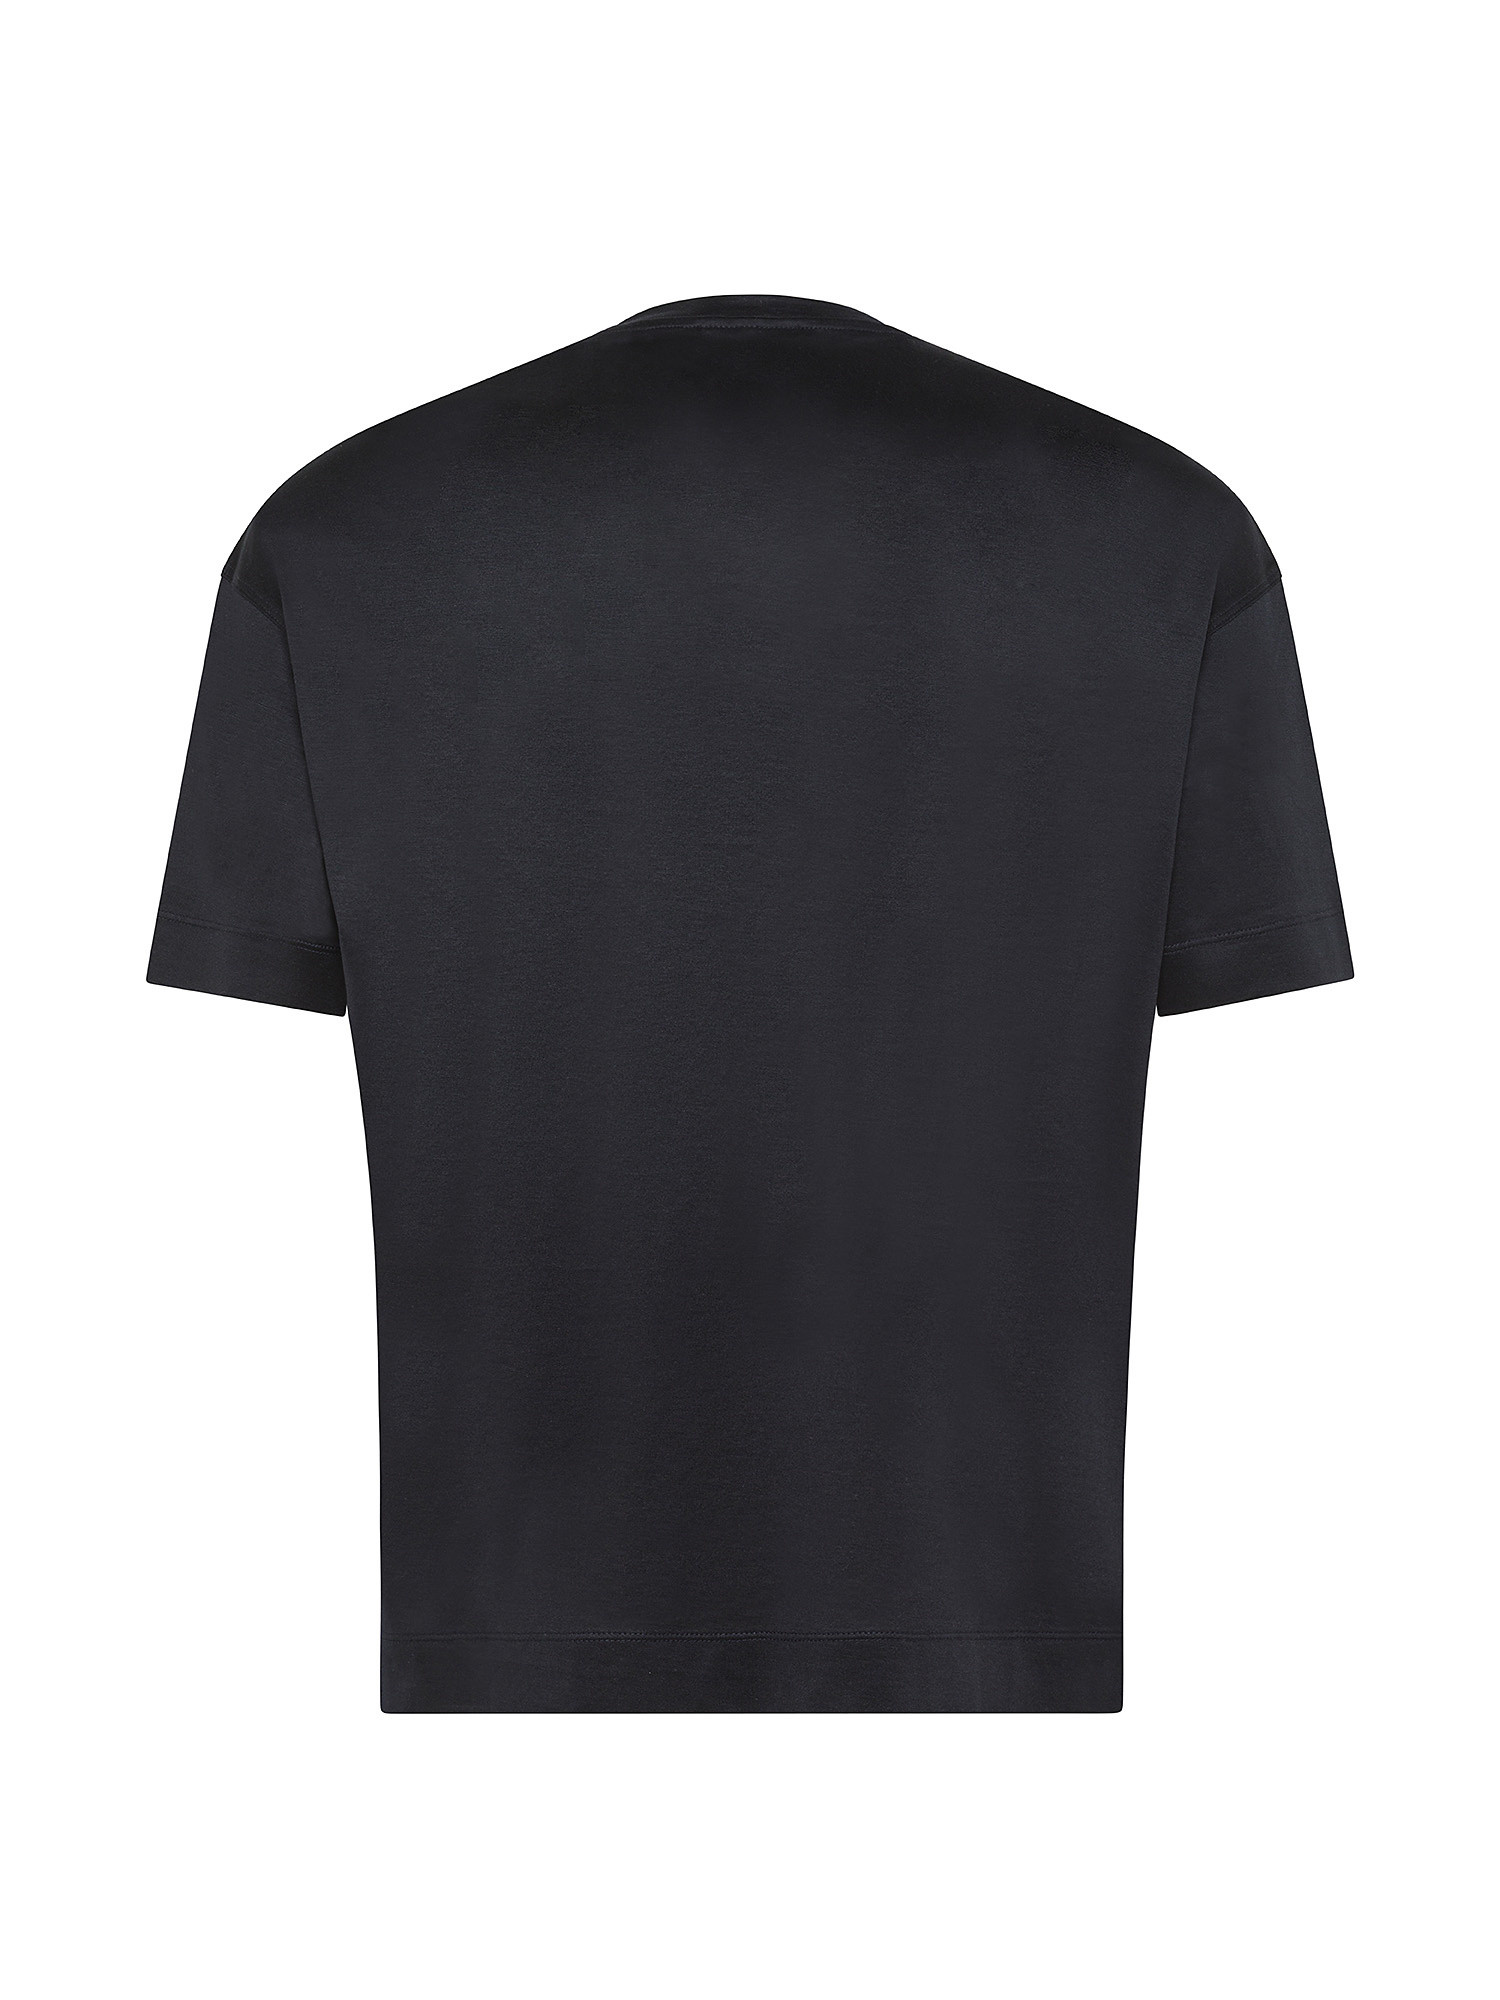 Emporio Armani - T-shirt con logo ricamato, Blu scuro, large image number 1